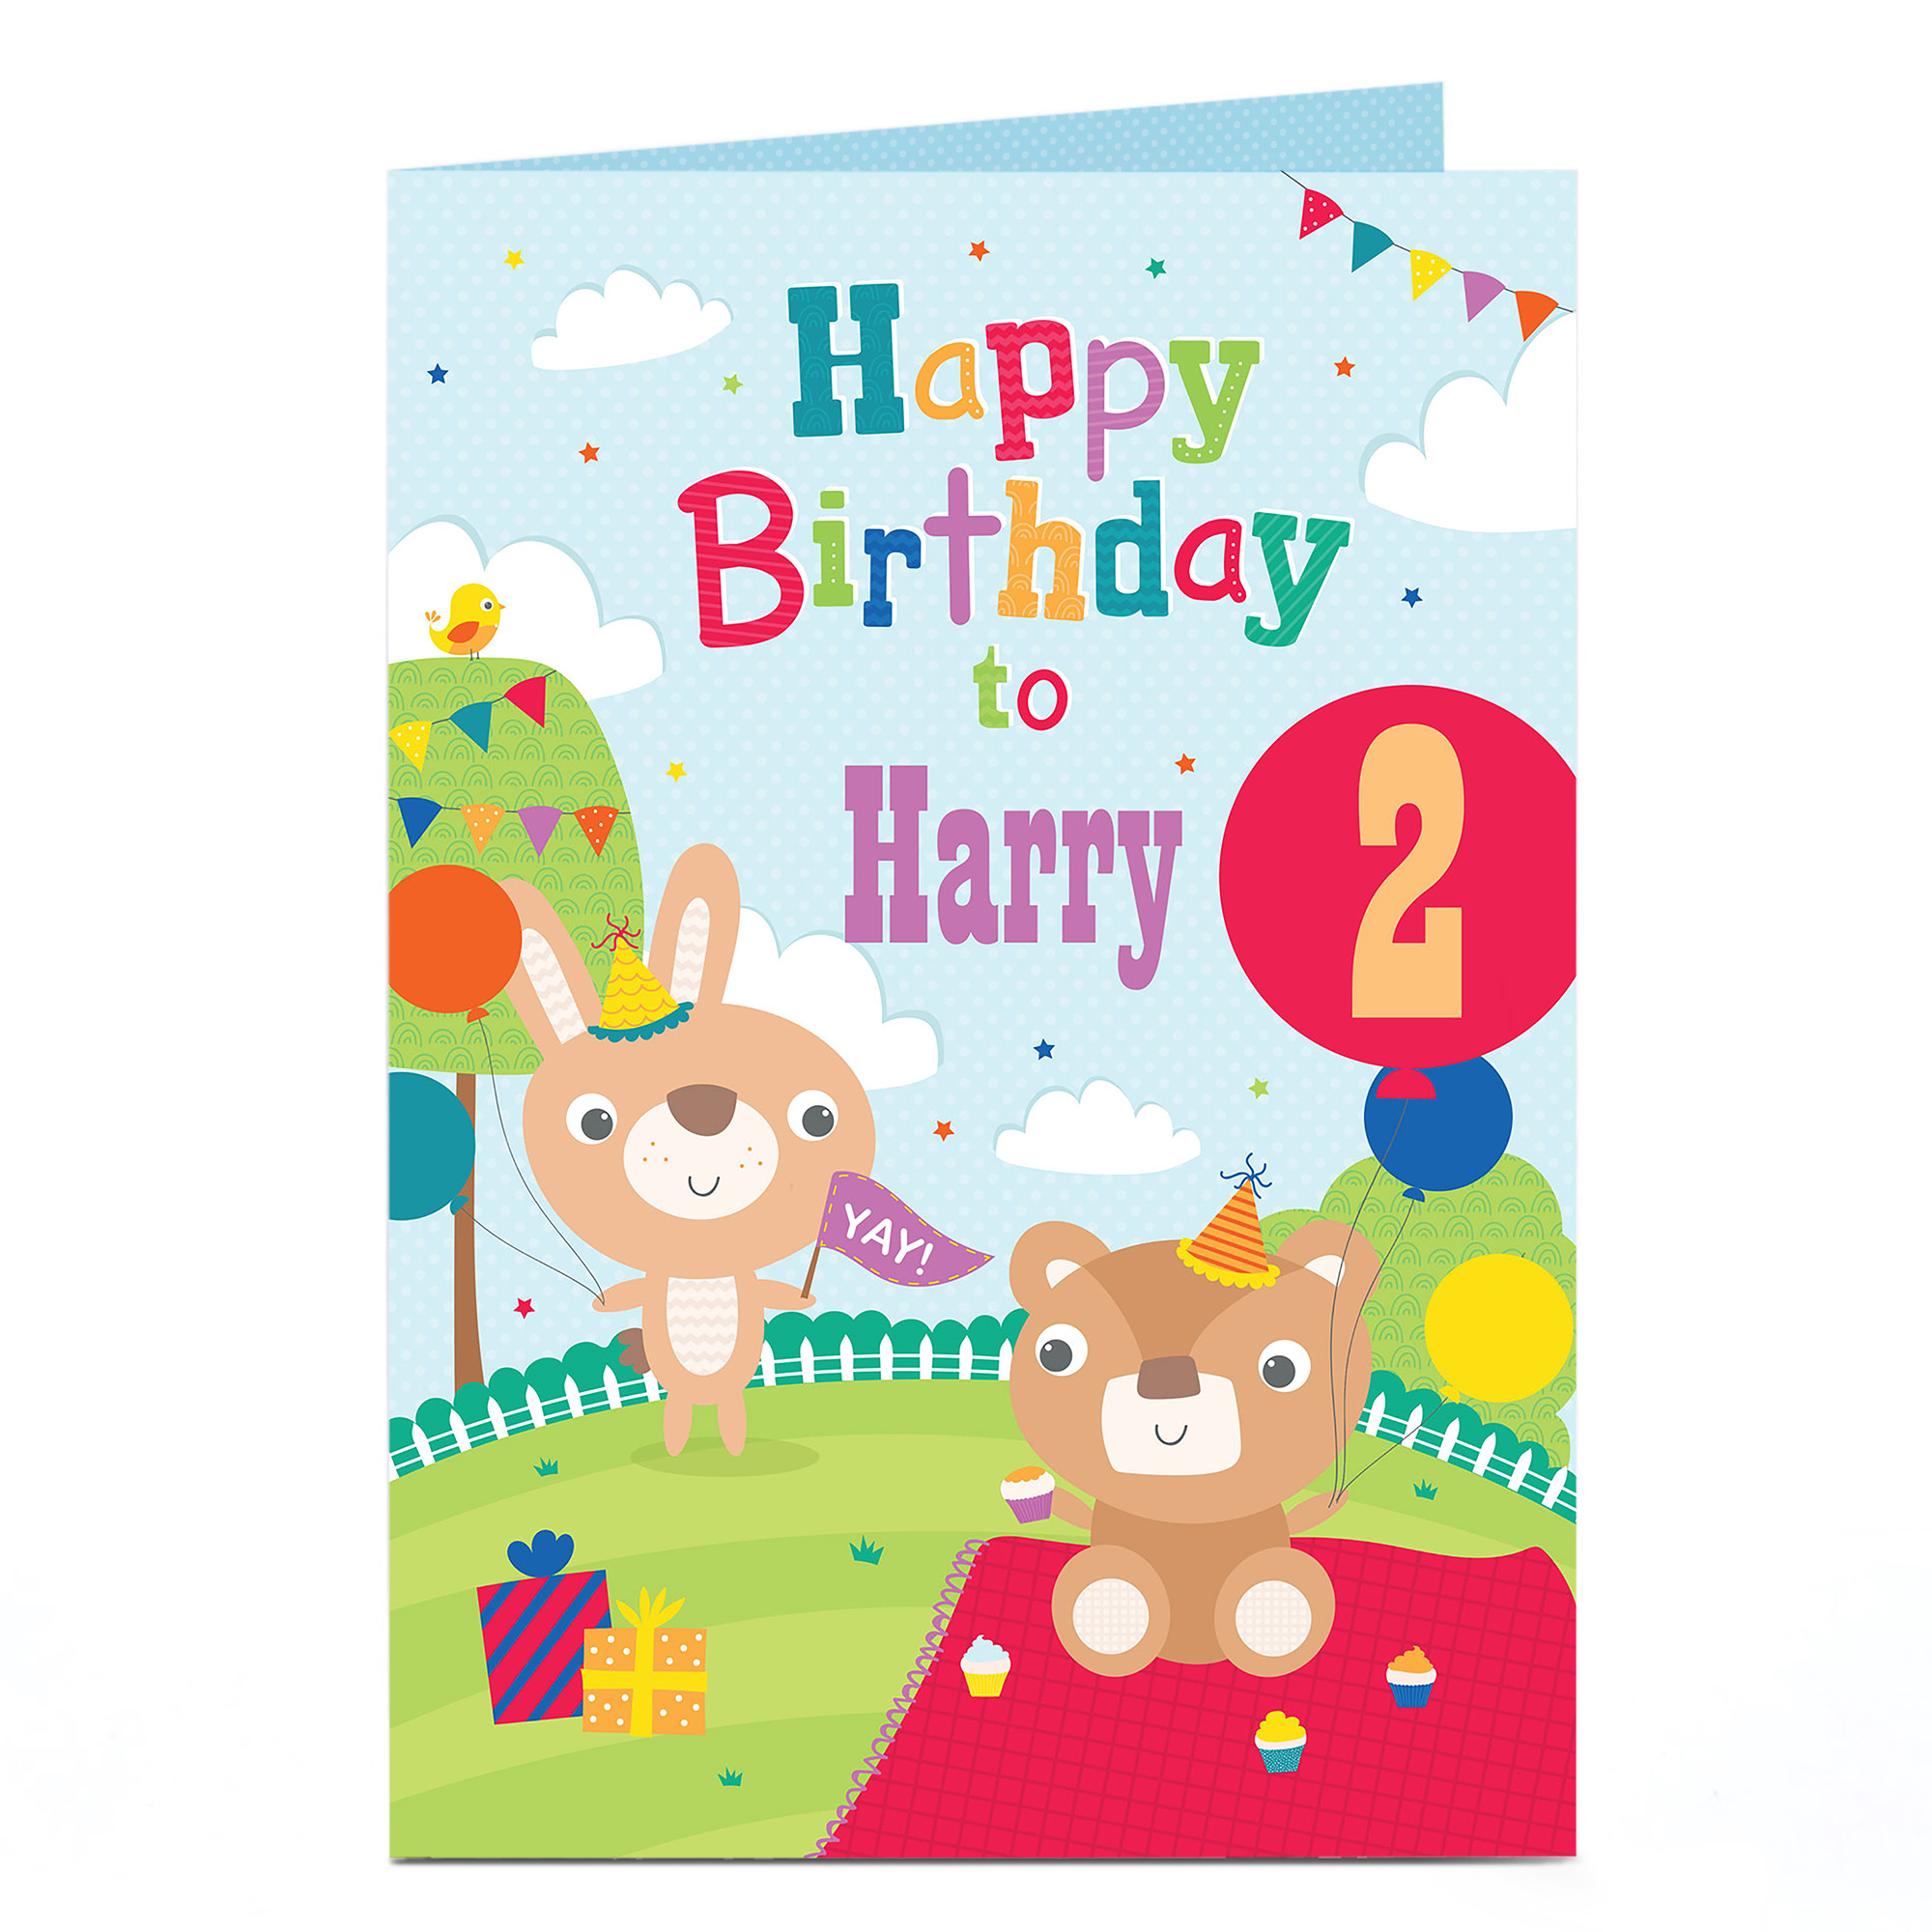 Personalised Editable Age Birthday Card - Teddy Bears Picnic